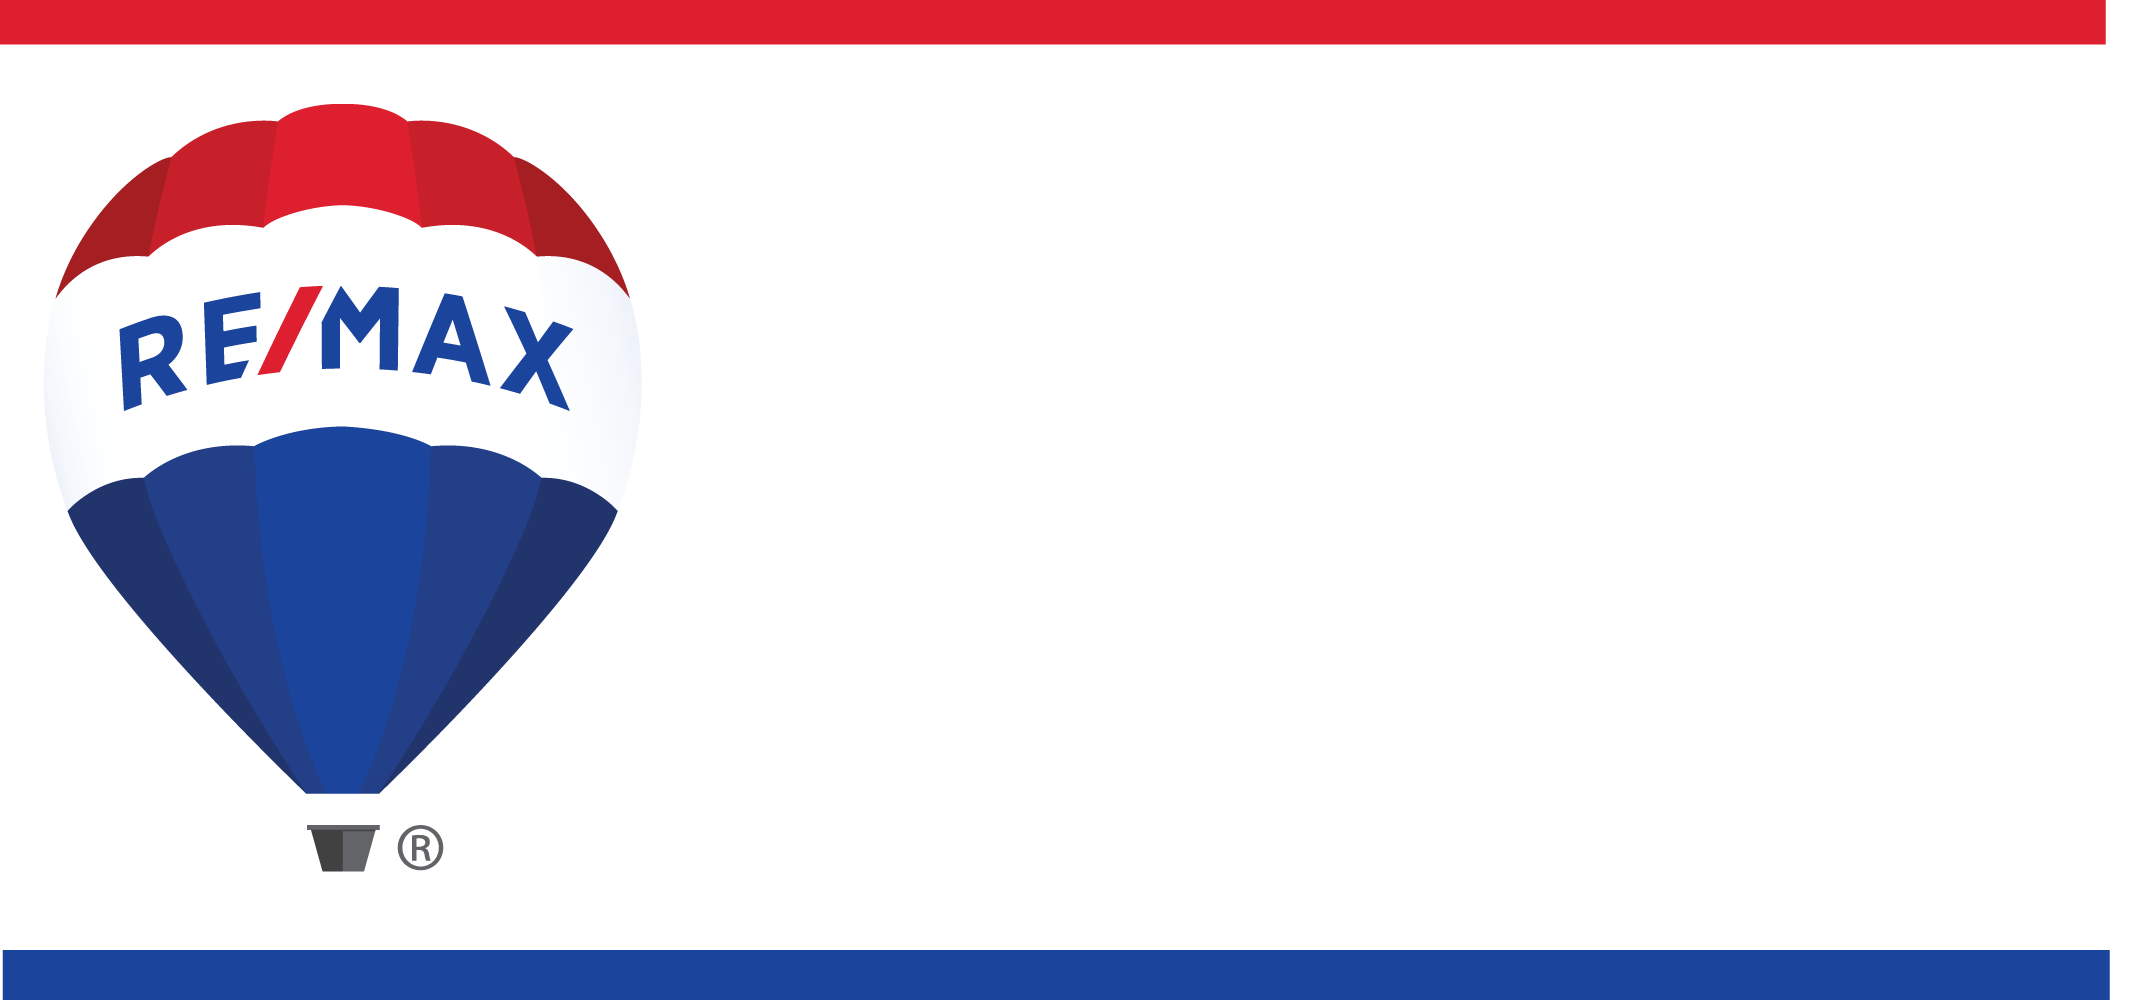 RE/MAX Logo - RE/MAX Elite Logos - RE/MAX Elite